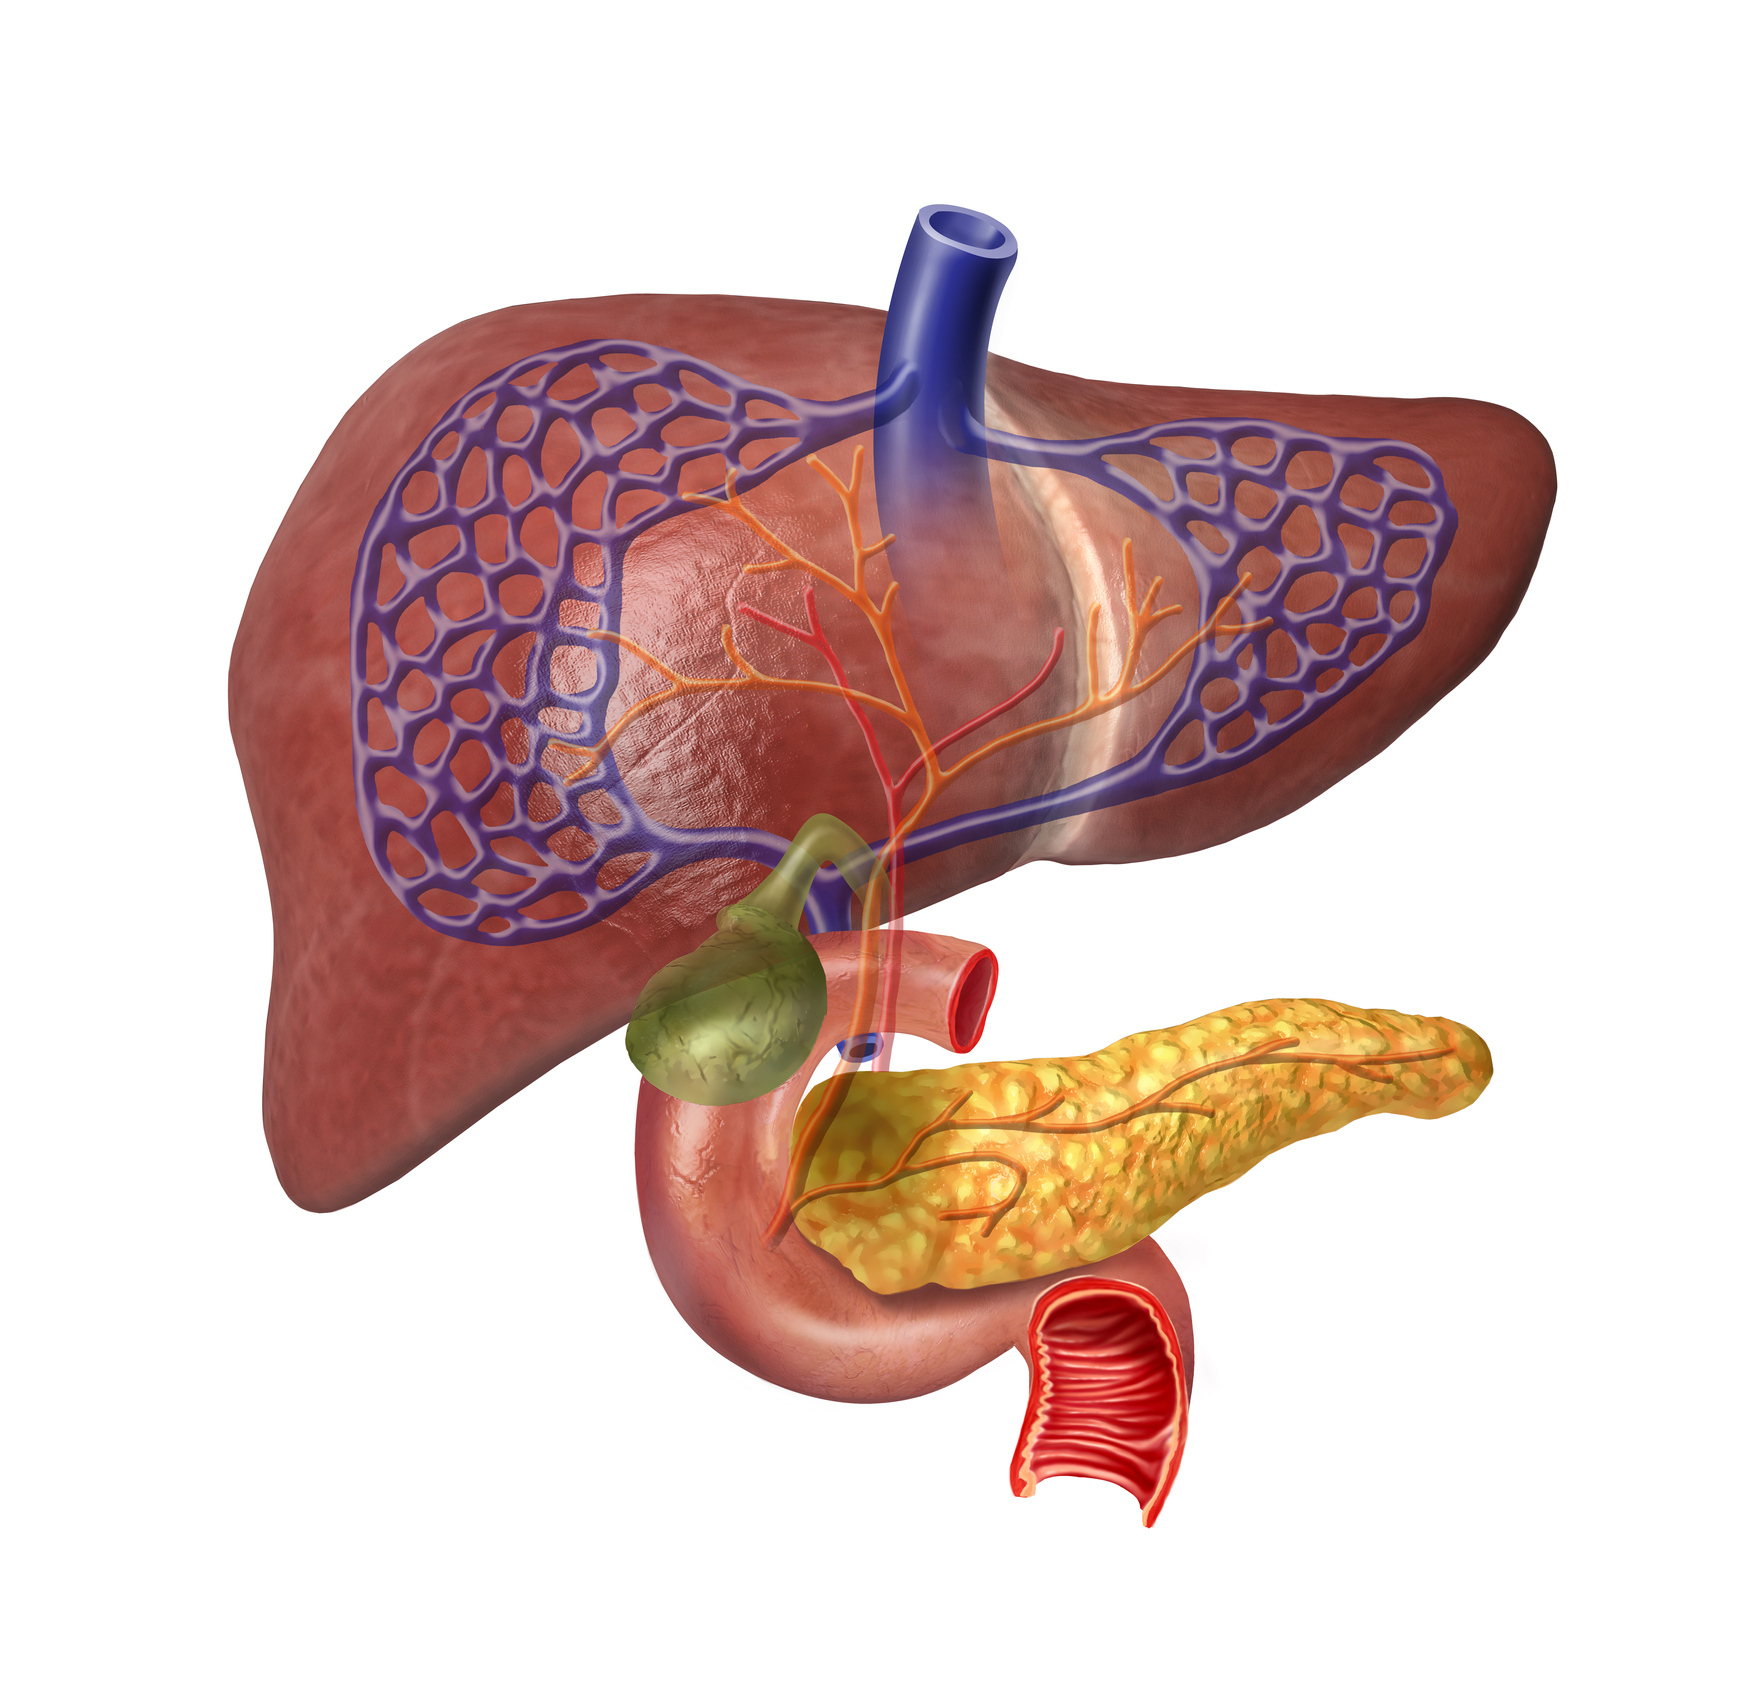 Liver system